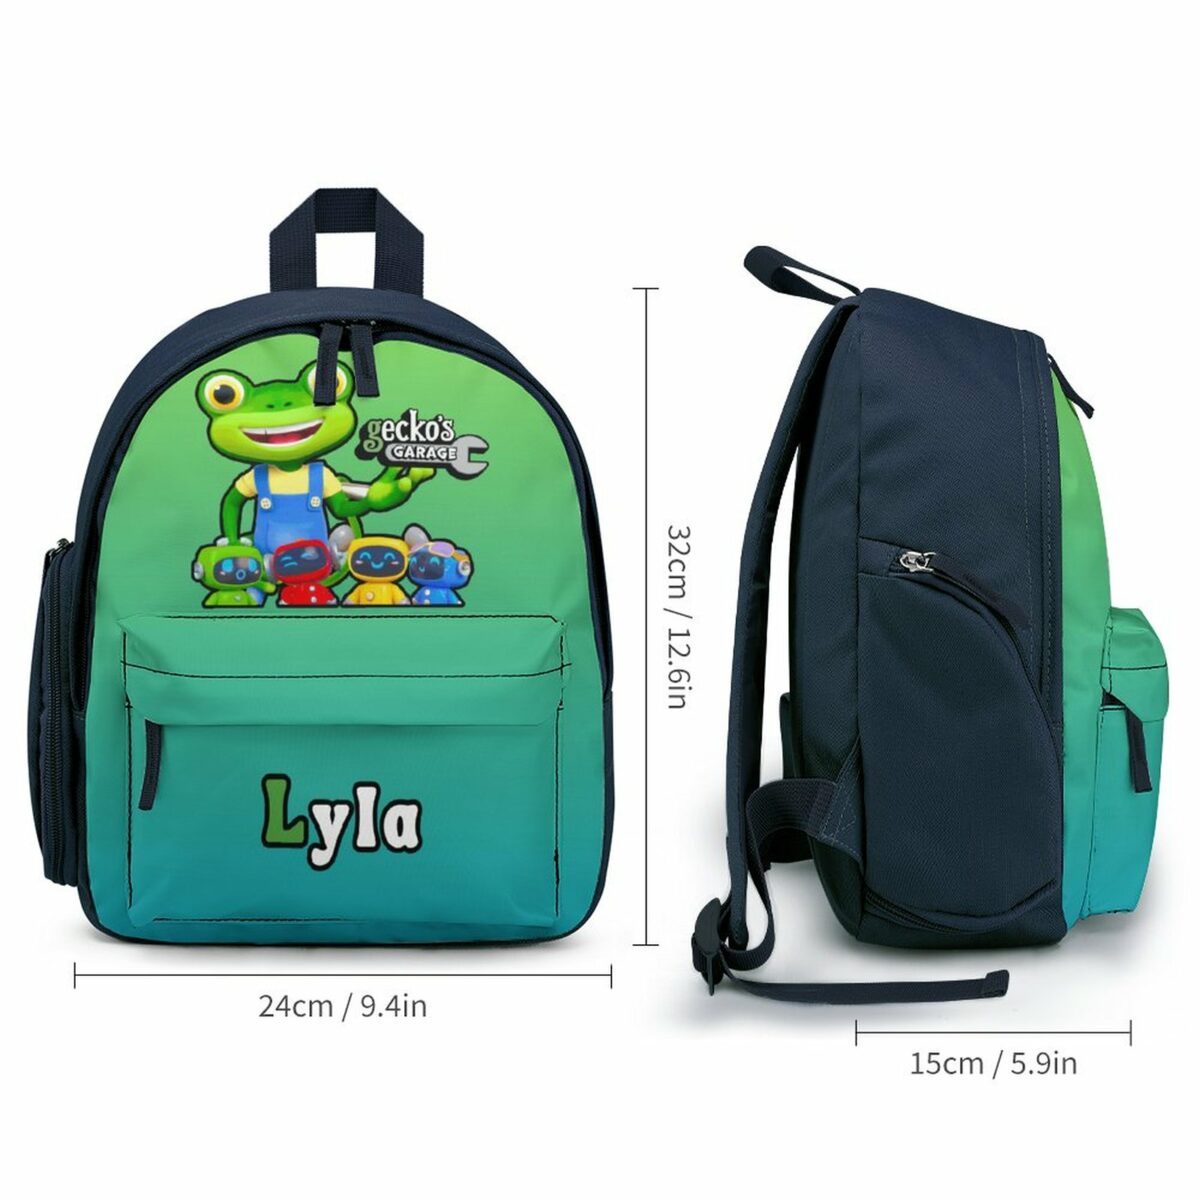 Gecko’s Garage Animated Series Character Children’s School Bag Cool Kiddo 14